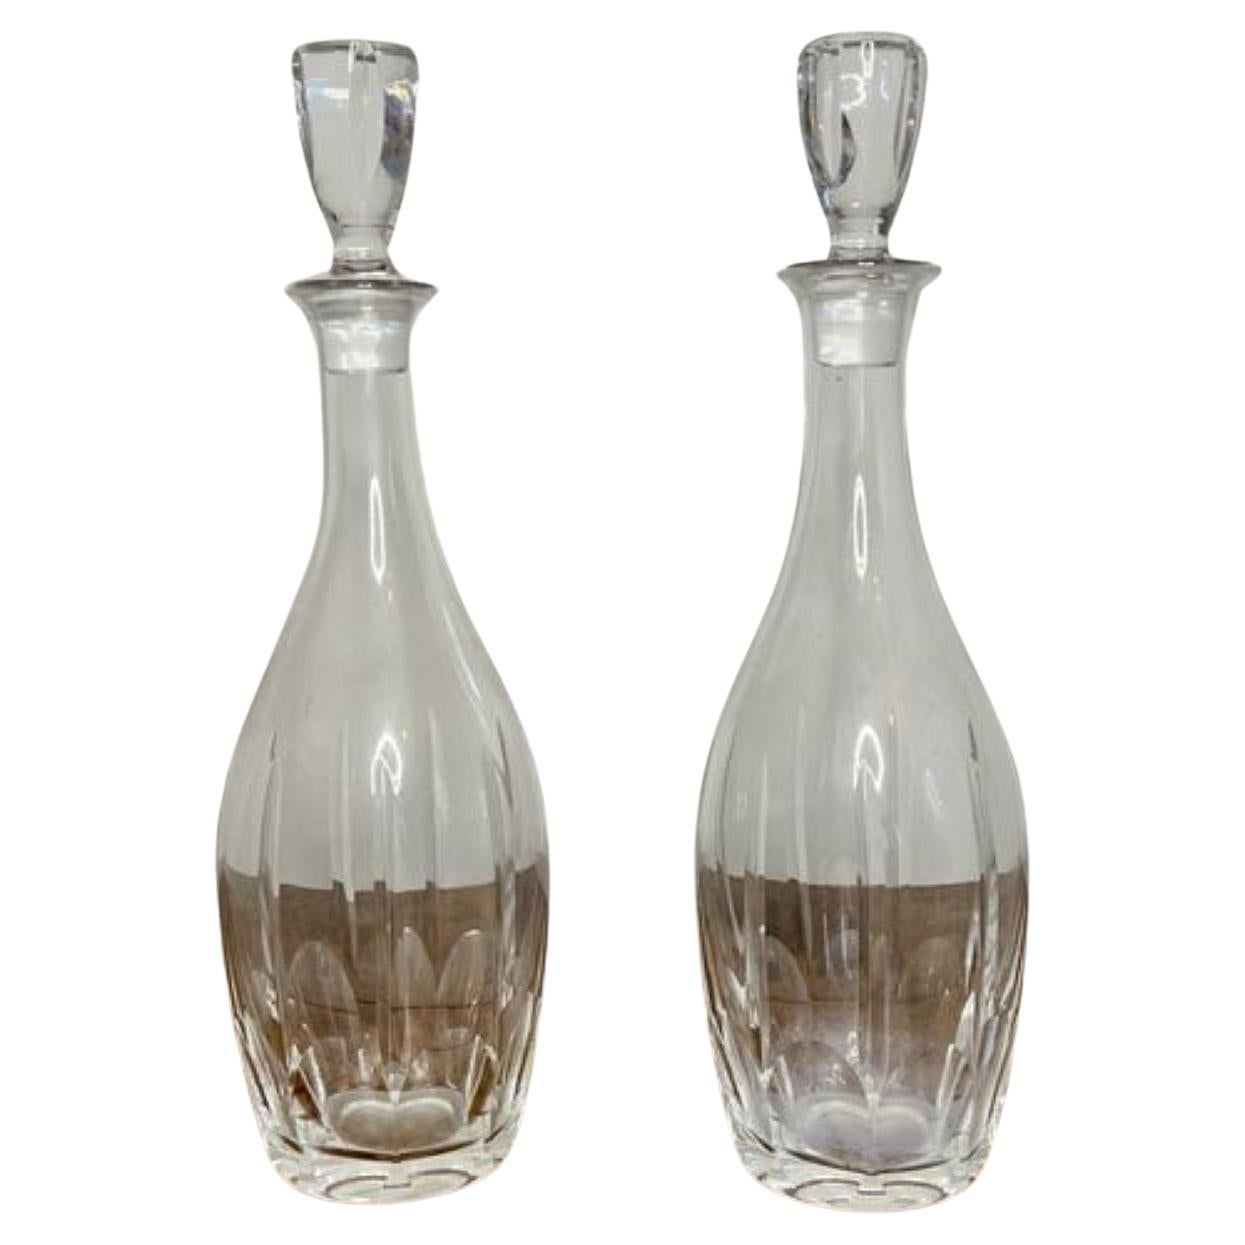 Fine pair of antique Edwardian glass decanters 